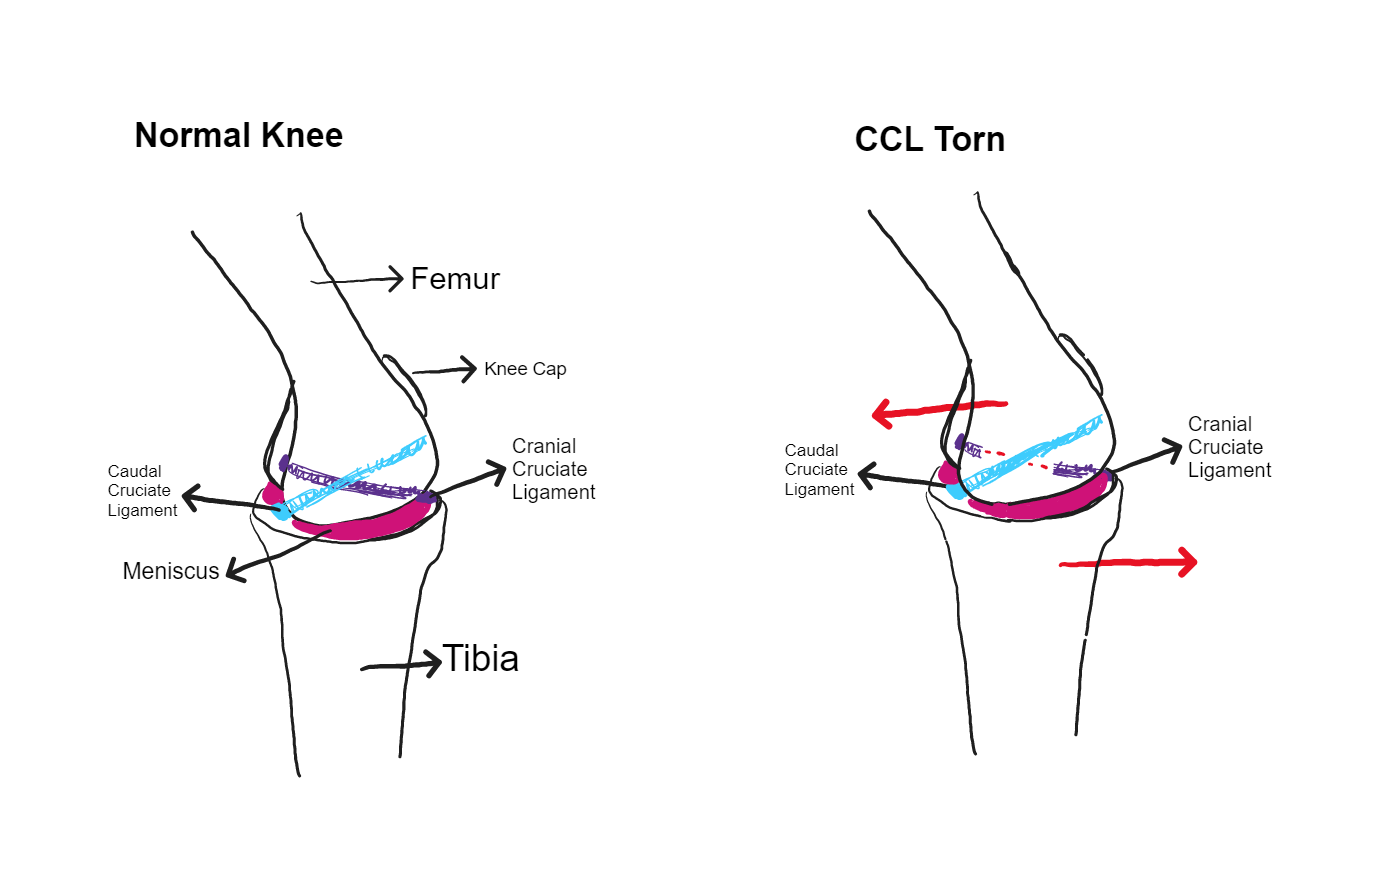 Figure 1 - Normal vs Torn CCL